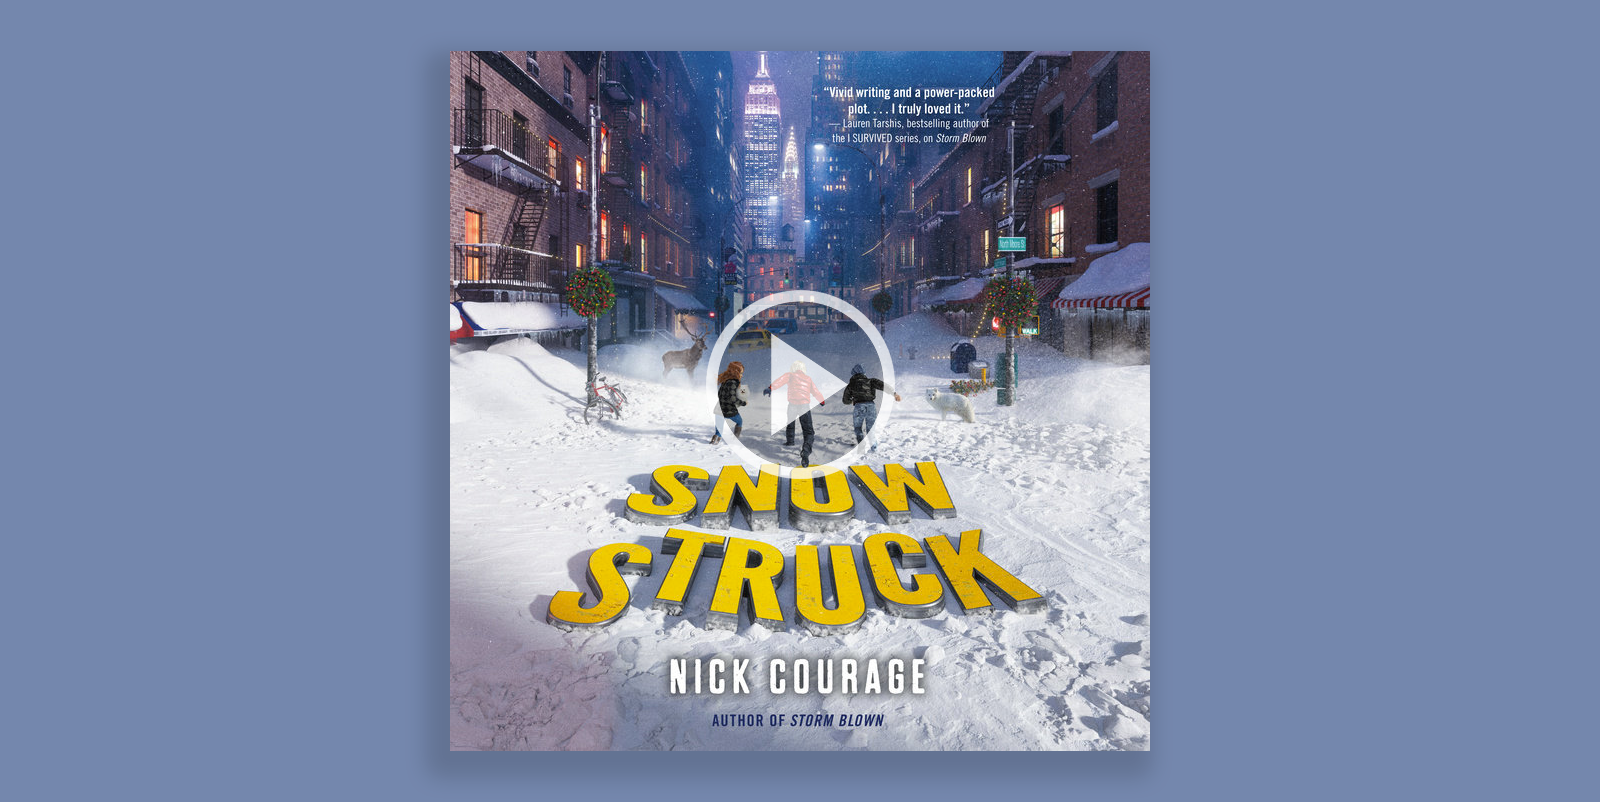 Snow Struck Audiobook Sample!